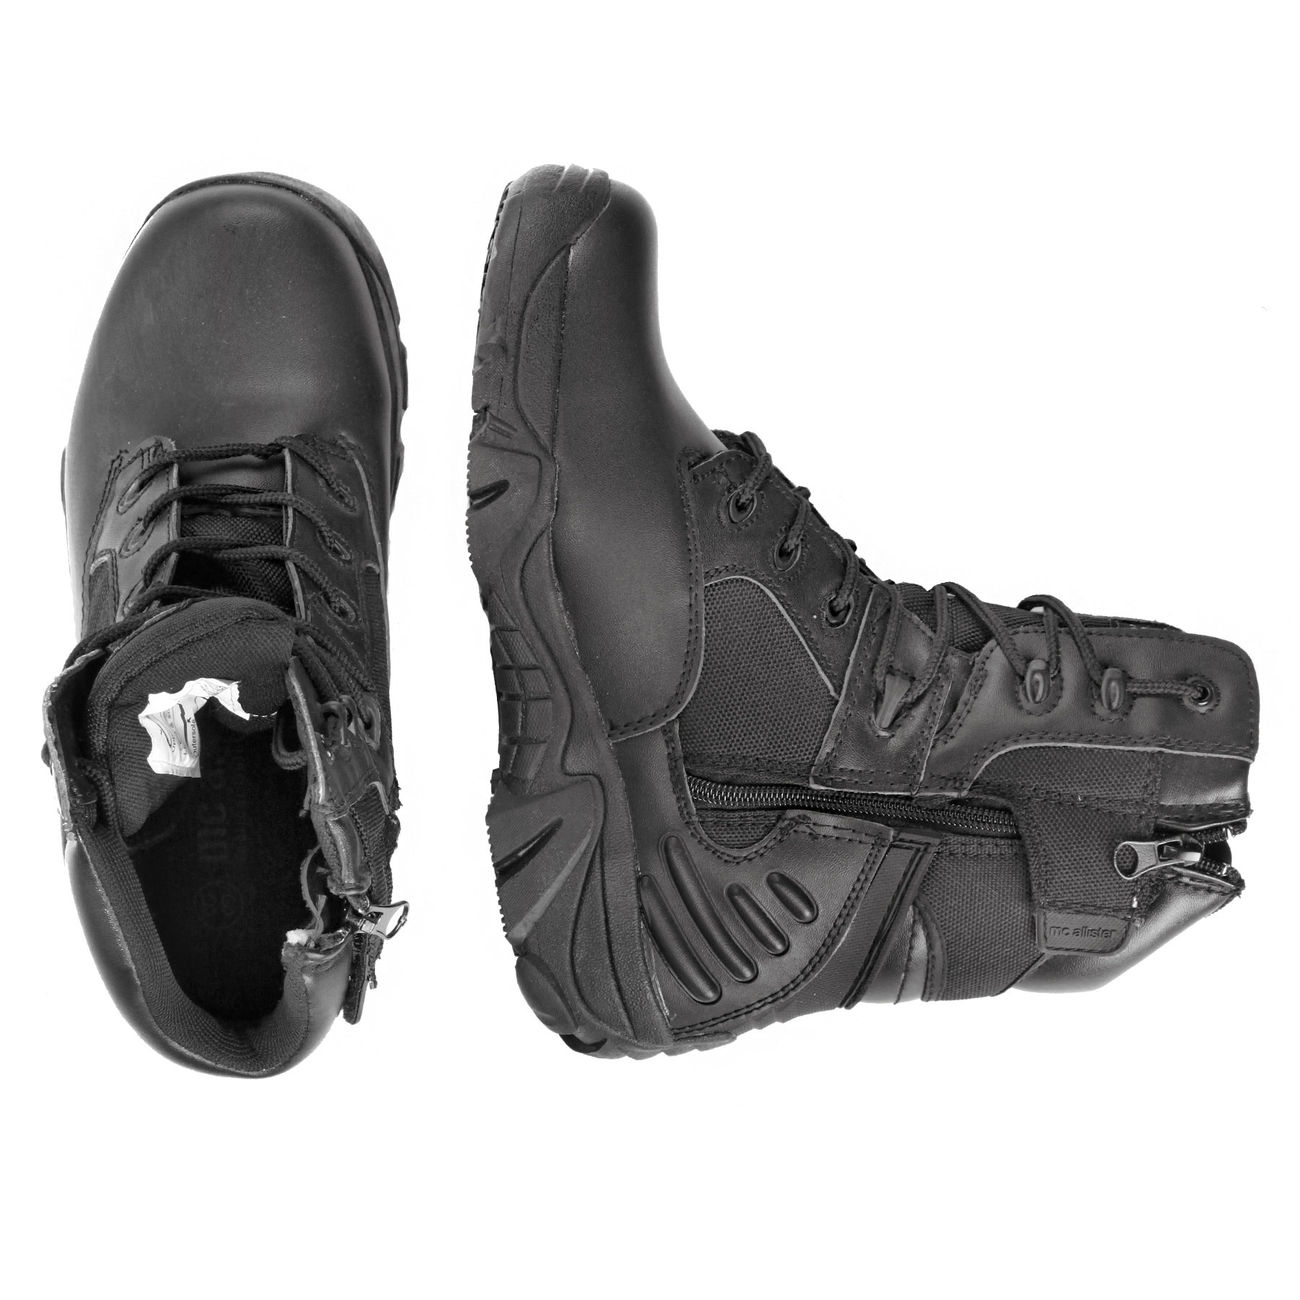 McAllister Stiefel Delta Force Tactical Outdoor Boots schwarz Bild 1